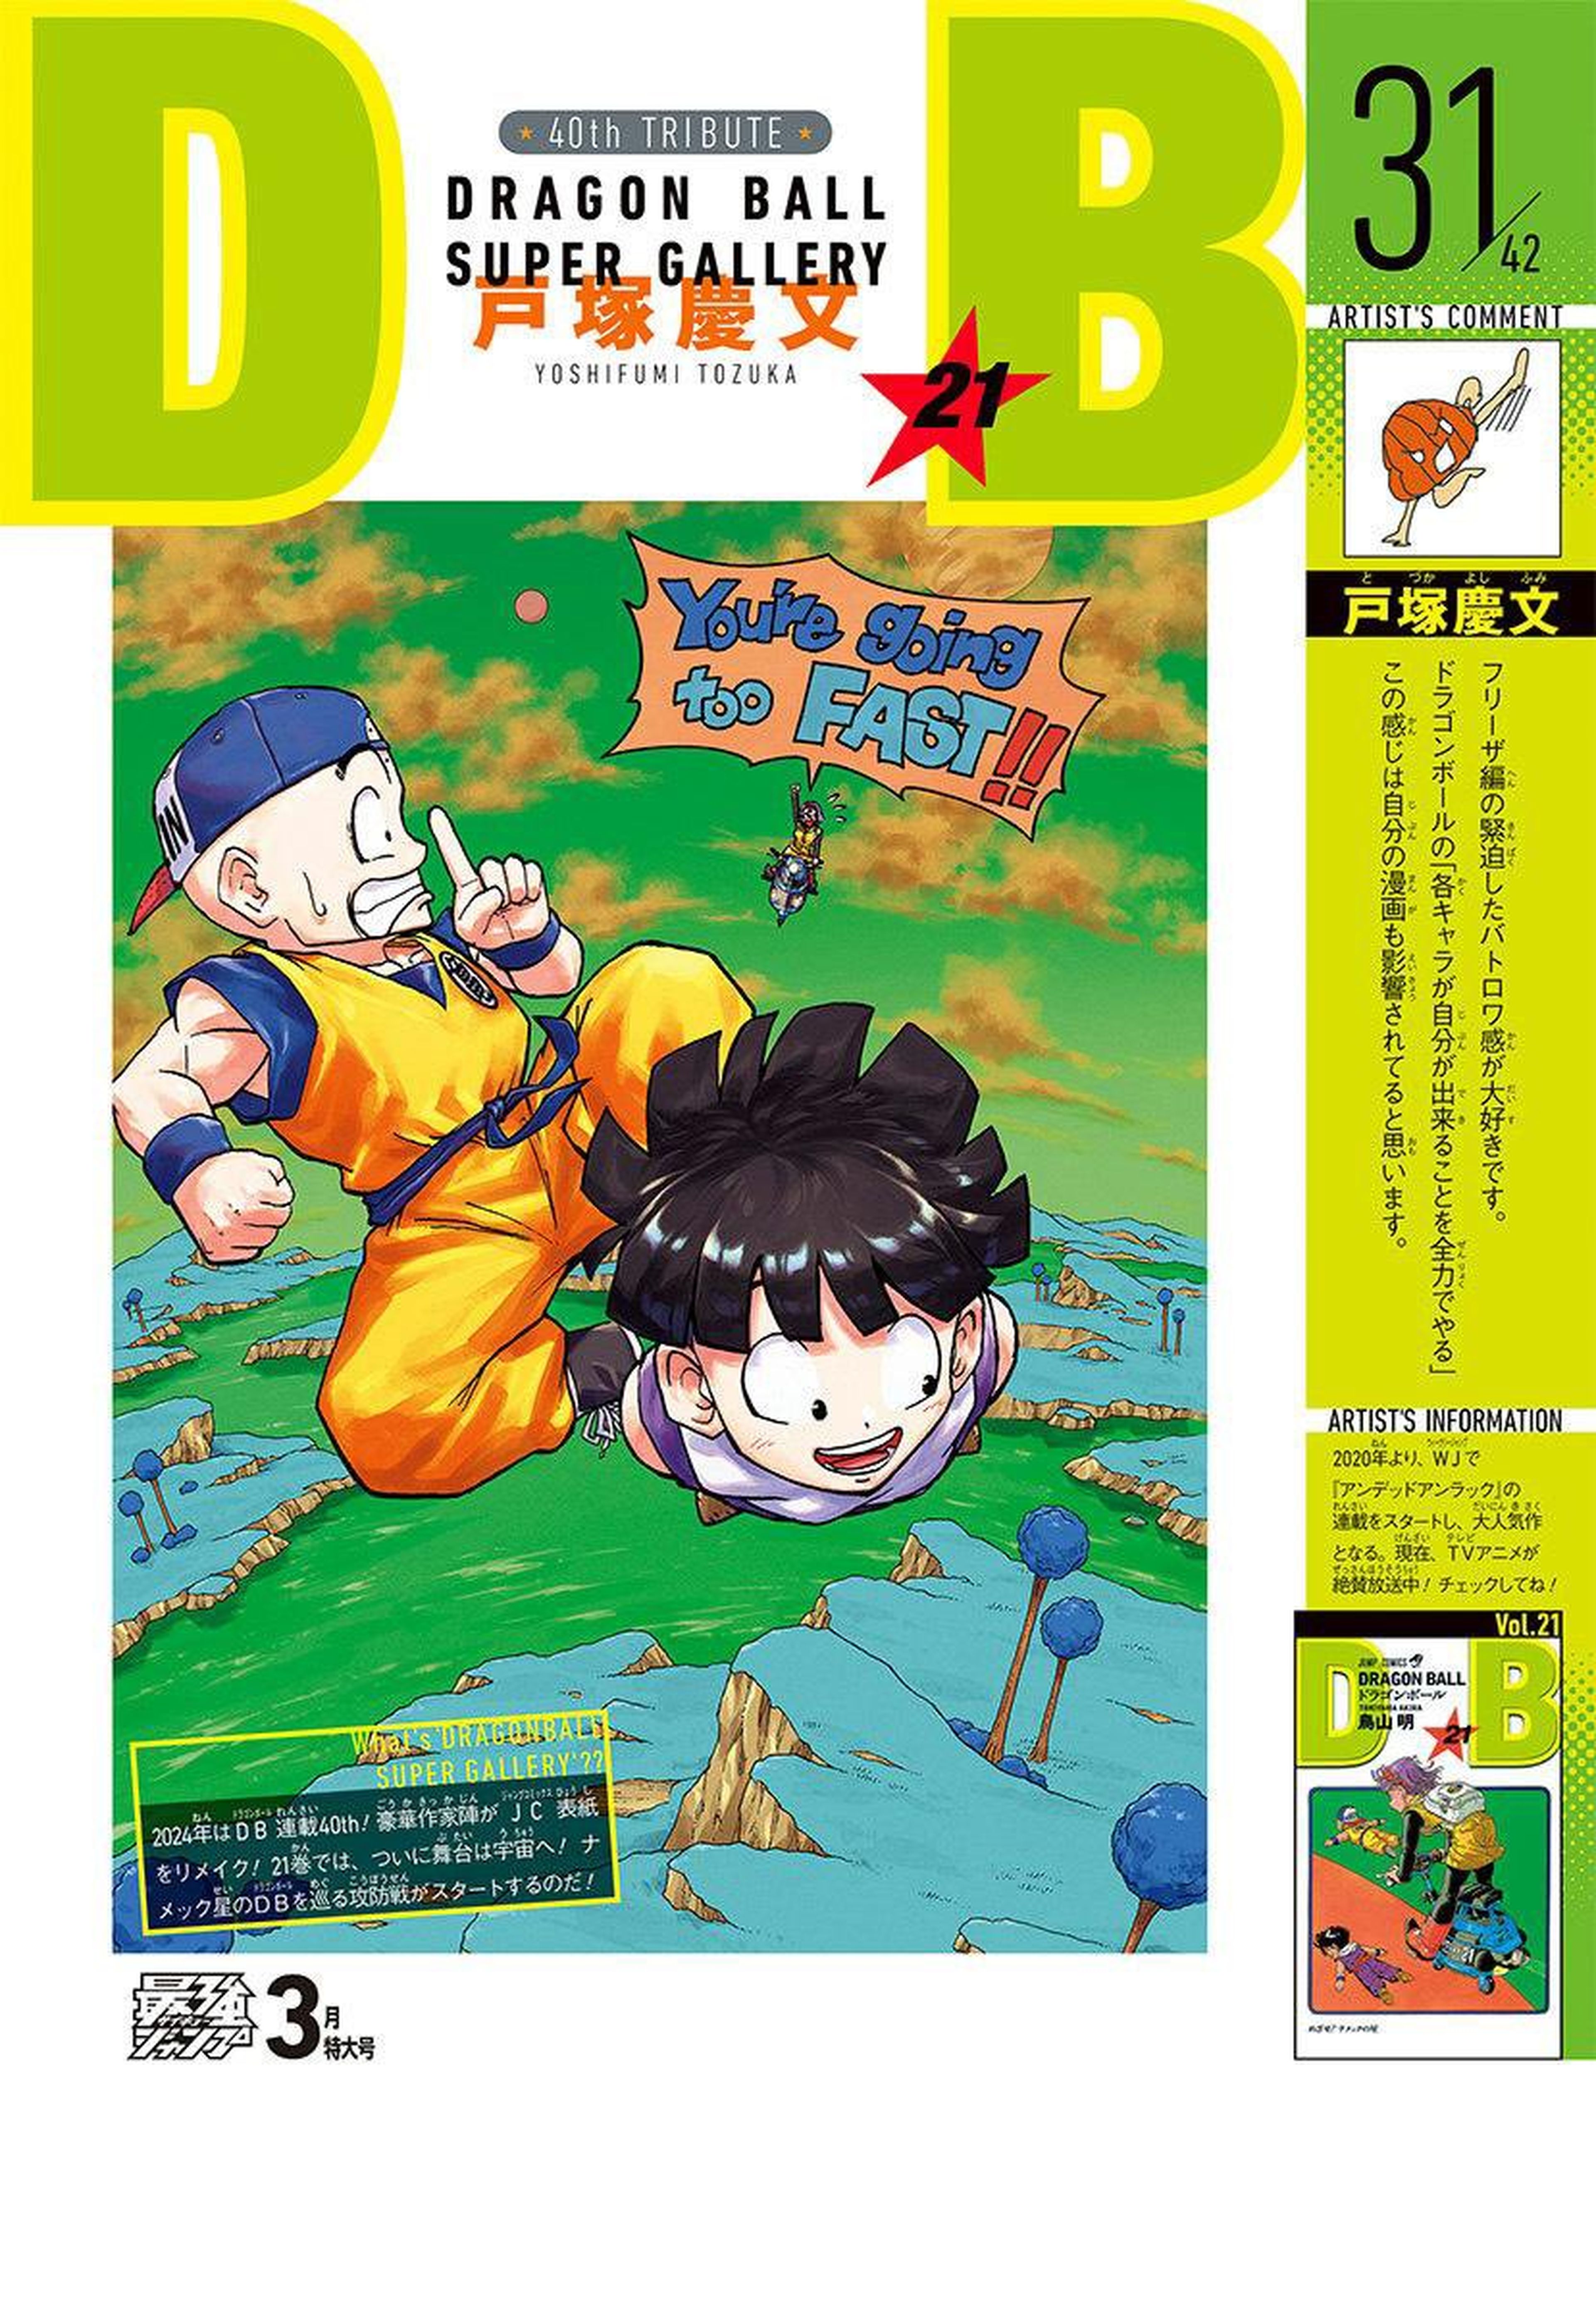 Dragon Ball - Yoshifumi Tozuka , autor de Undead Unlock, dibuja una preciosa portada namekiana de la serie de Akira Toriyama 